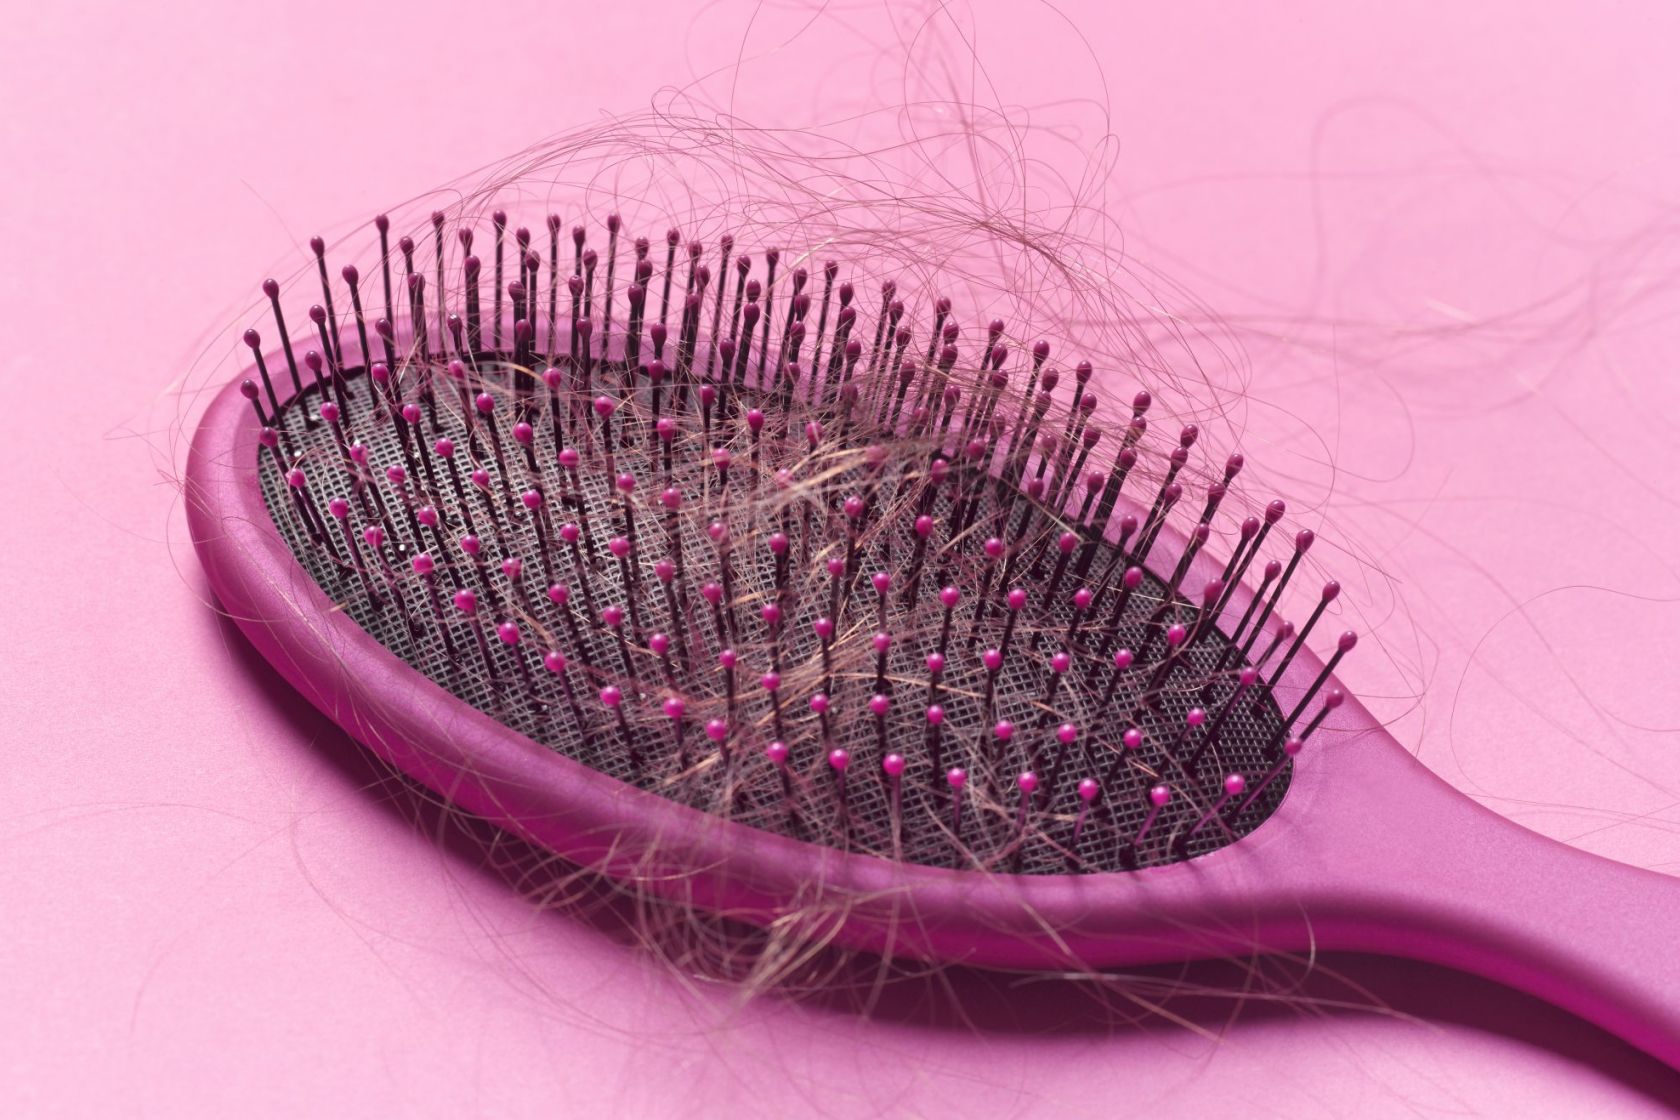 Seasonal Hair Loss: Can Winter Really Make Your Hair Fall Out?